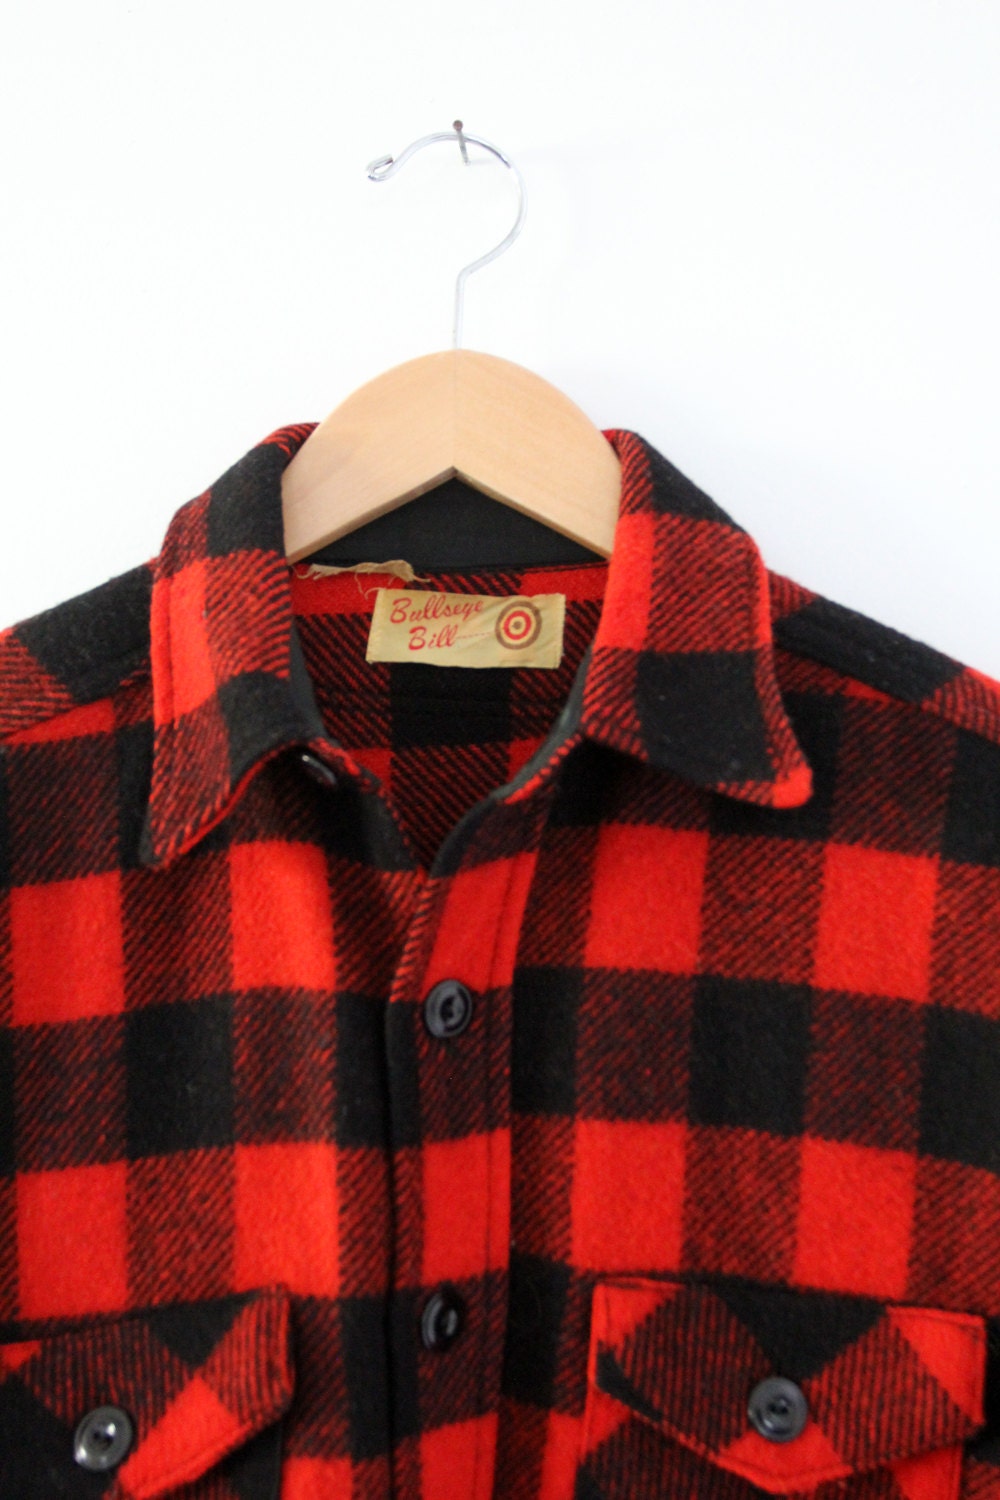 Vintage Plaid Shirt Jacket 1950s Bullseye Bill Hunting Shirt - Etsy